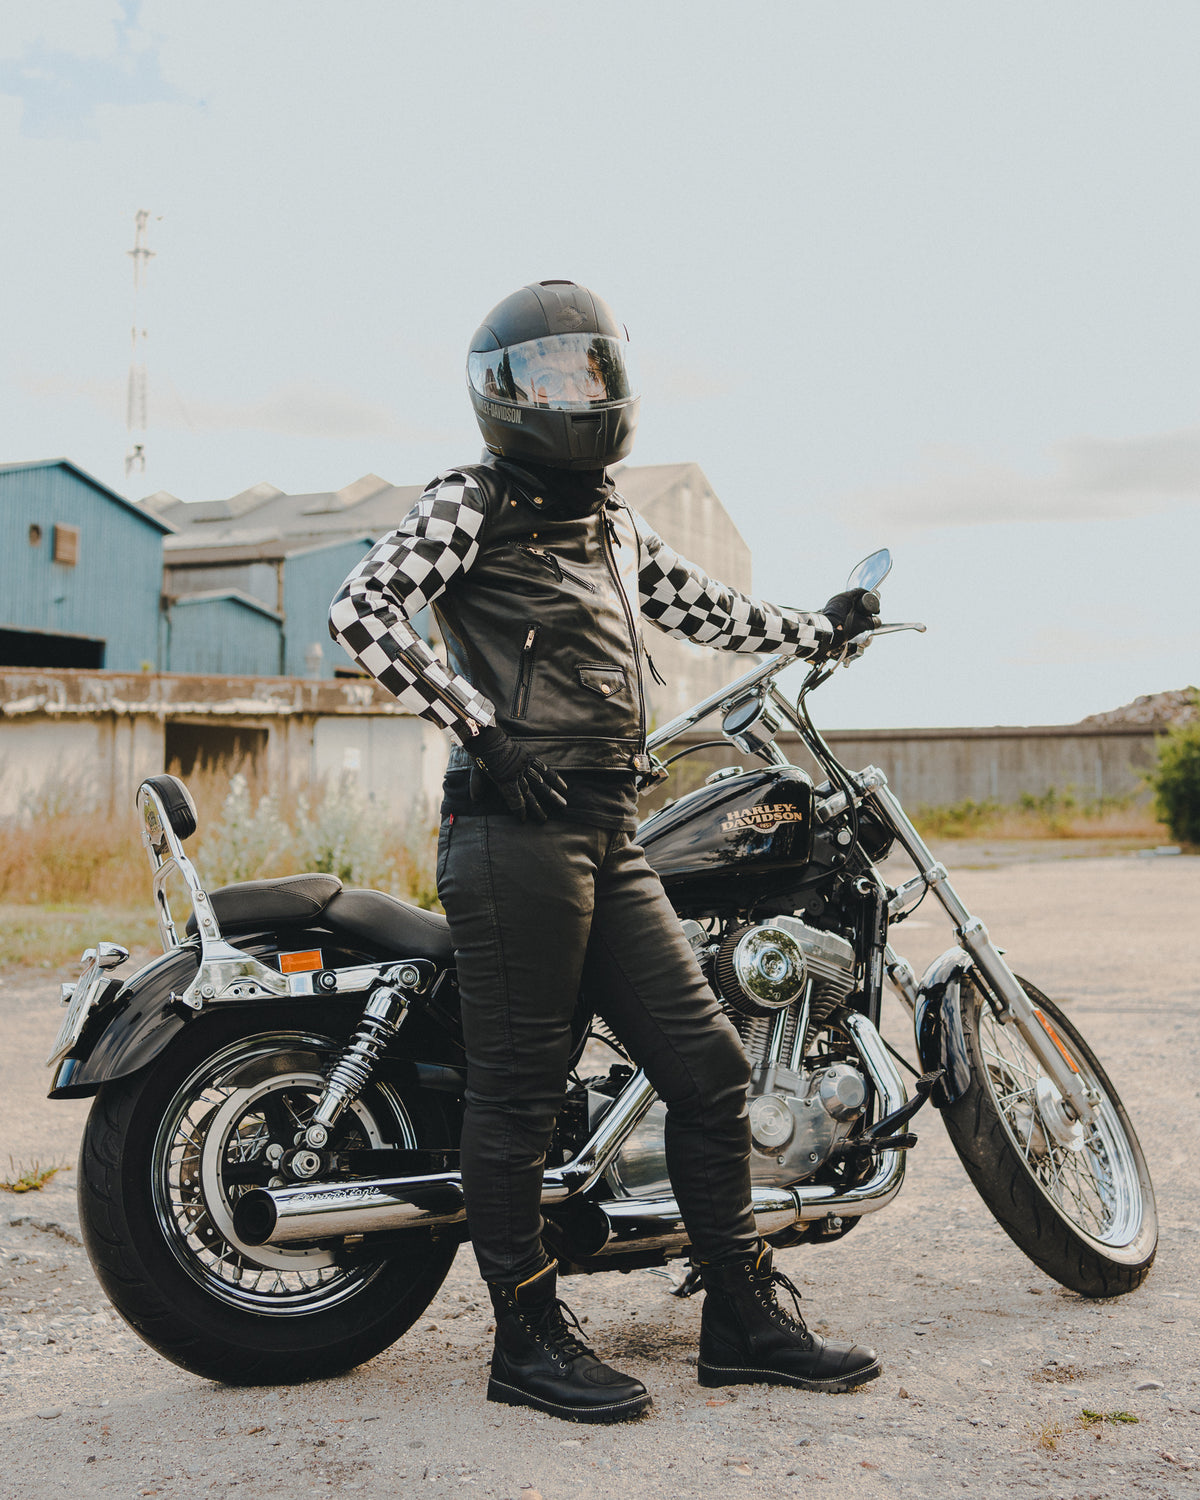 MotoGirl Ltd - Ladies motorcycle safety clothing brand